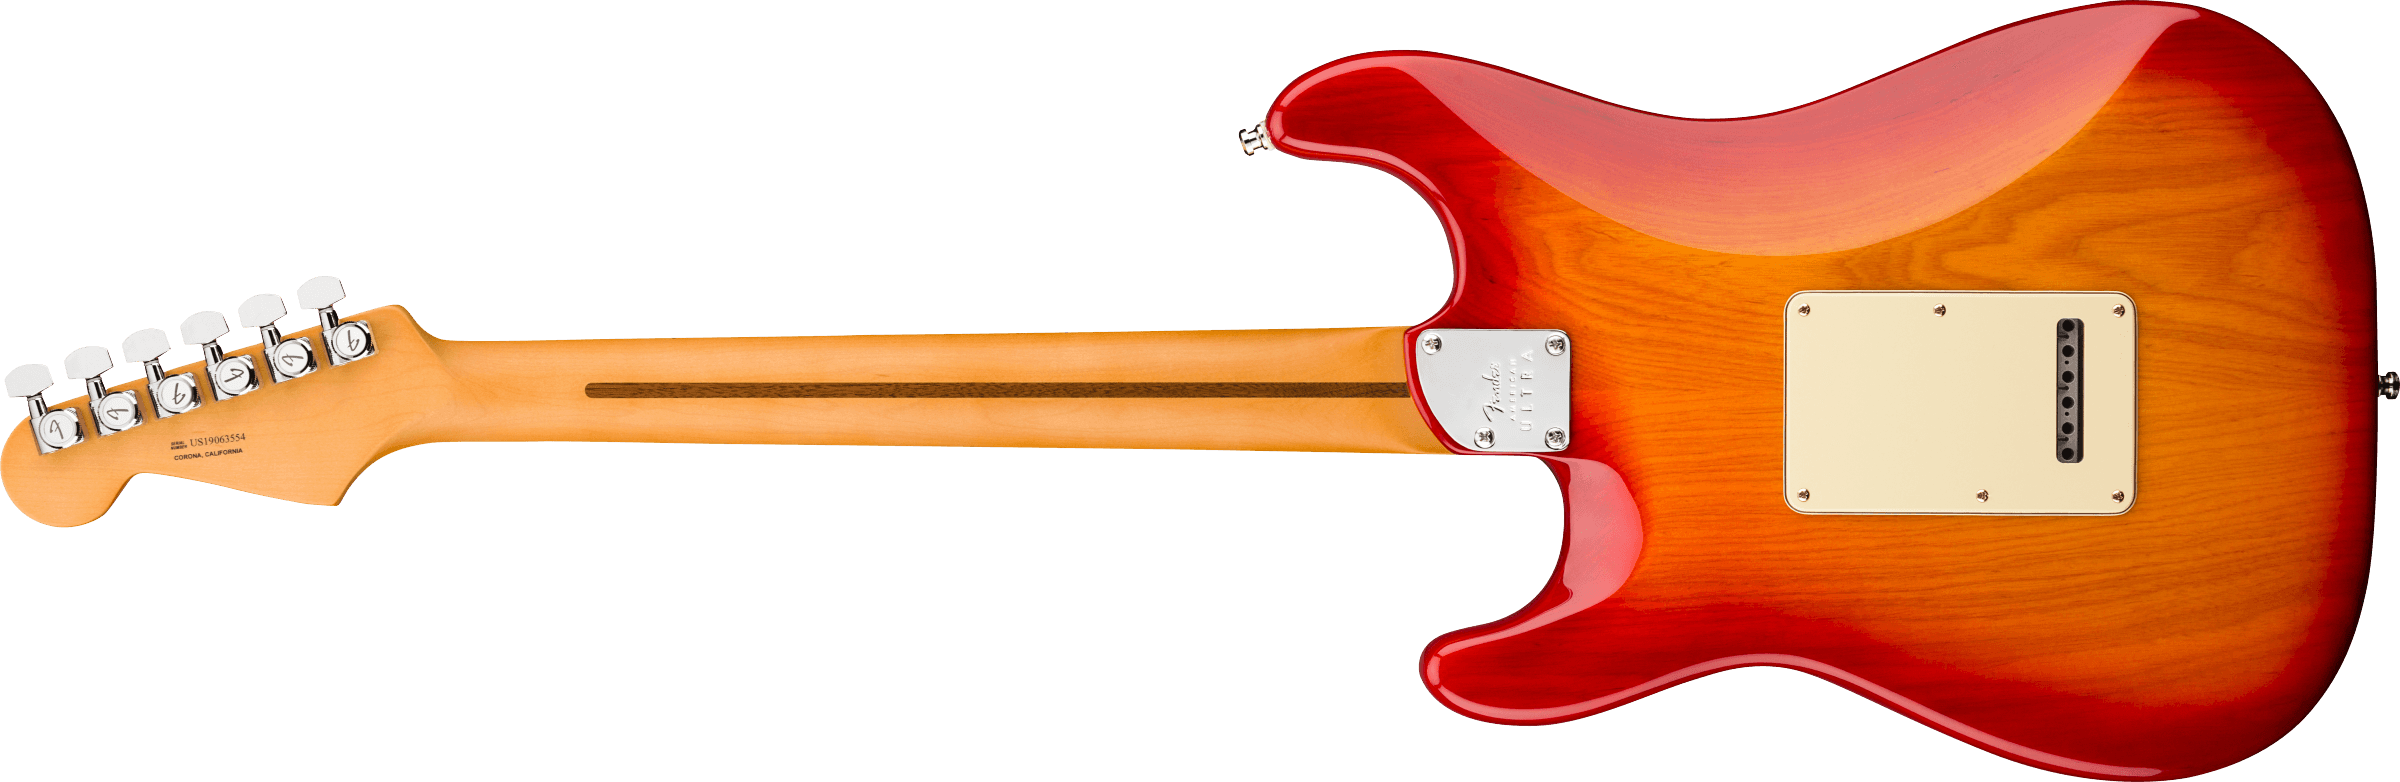 Fender Strat American Ultra Hss 2019 Usa Mn - Plasma Red Burst - E-Gitarre in Str-Form - Variation 1